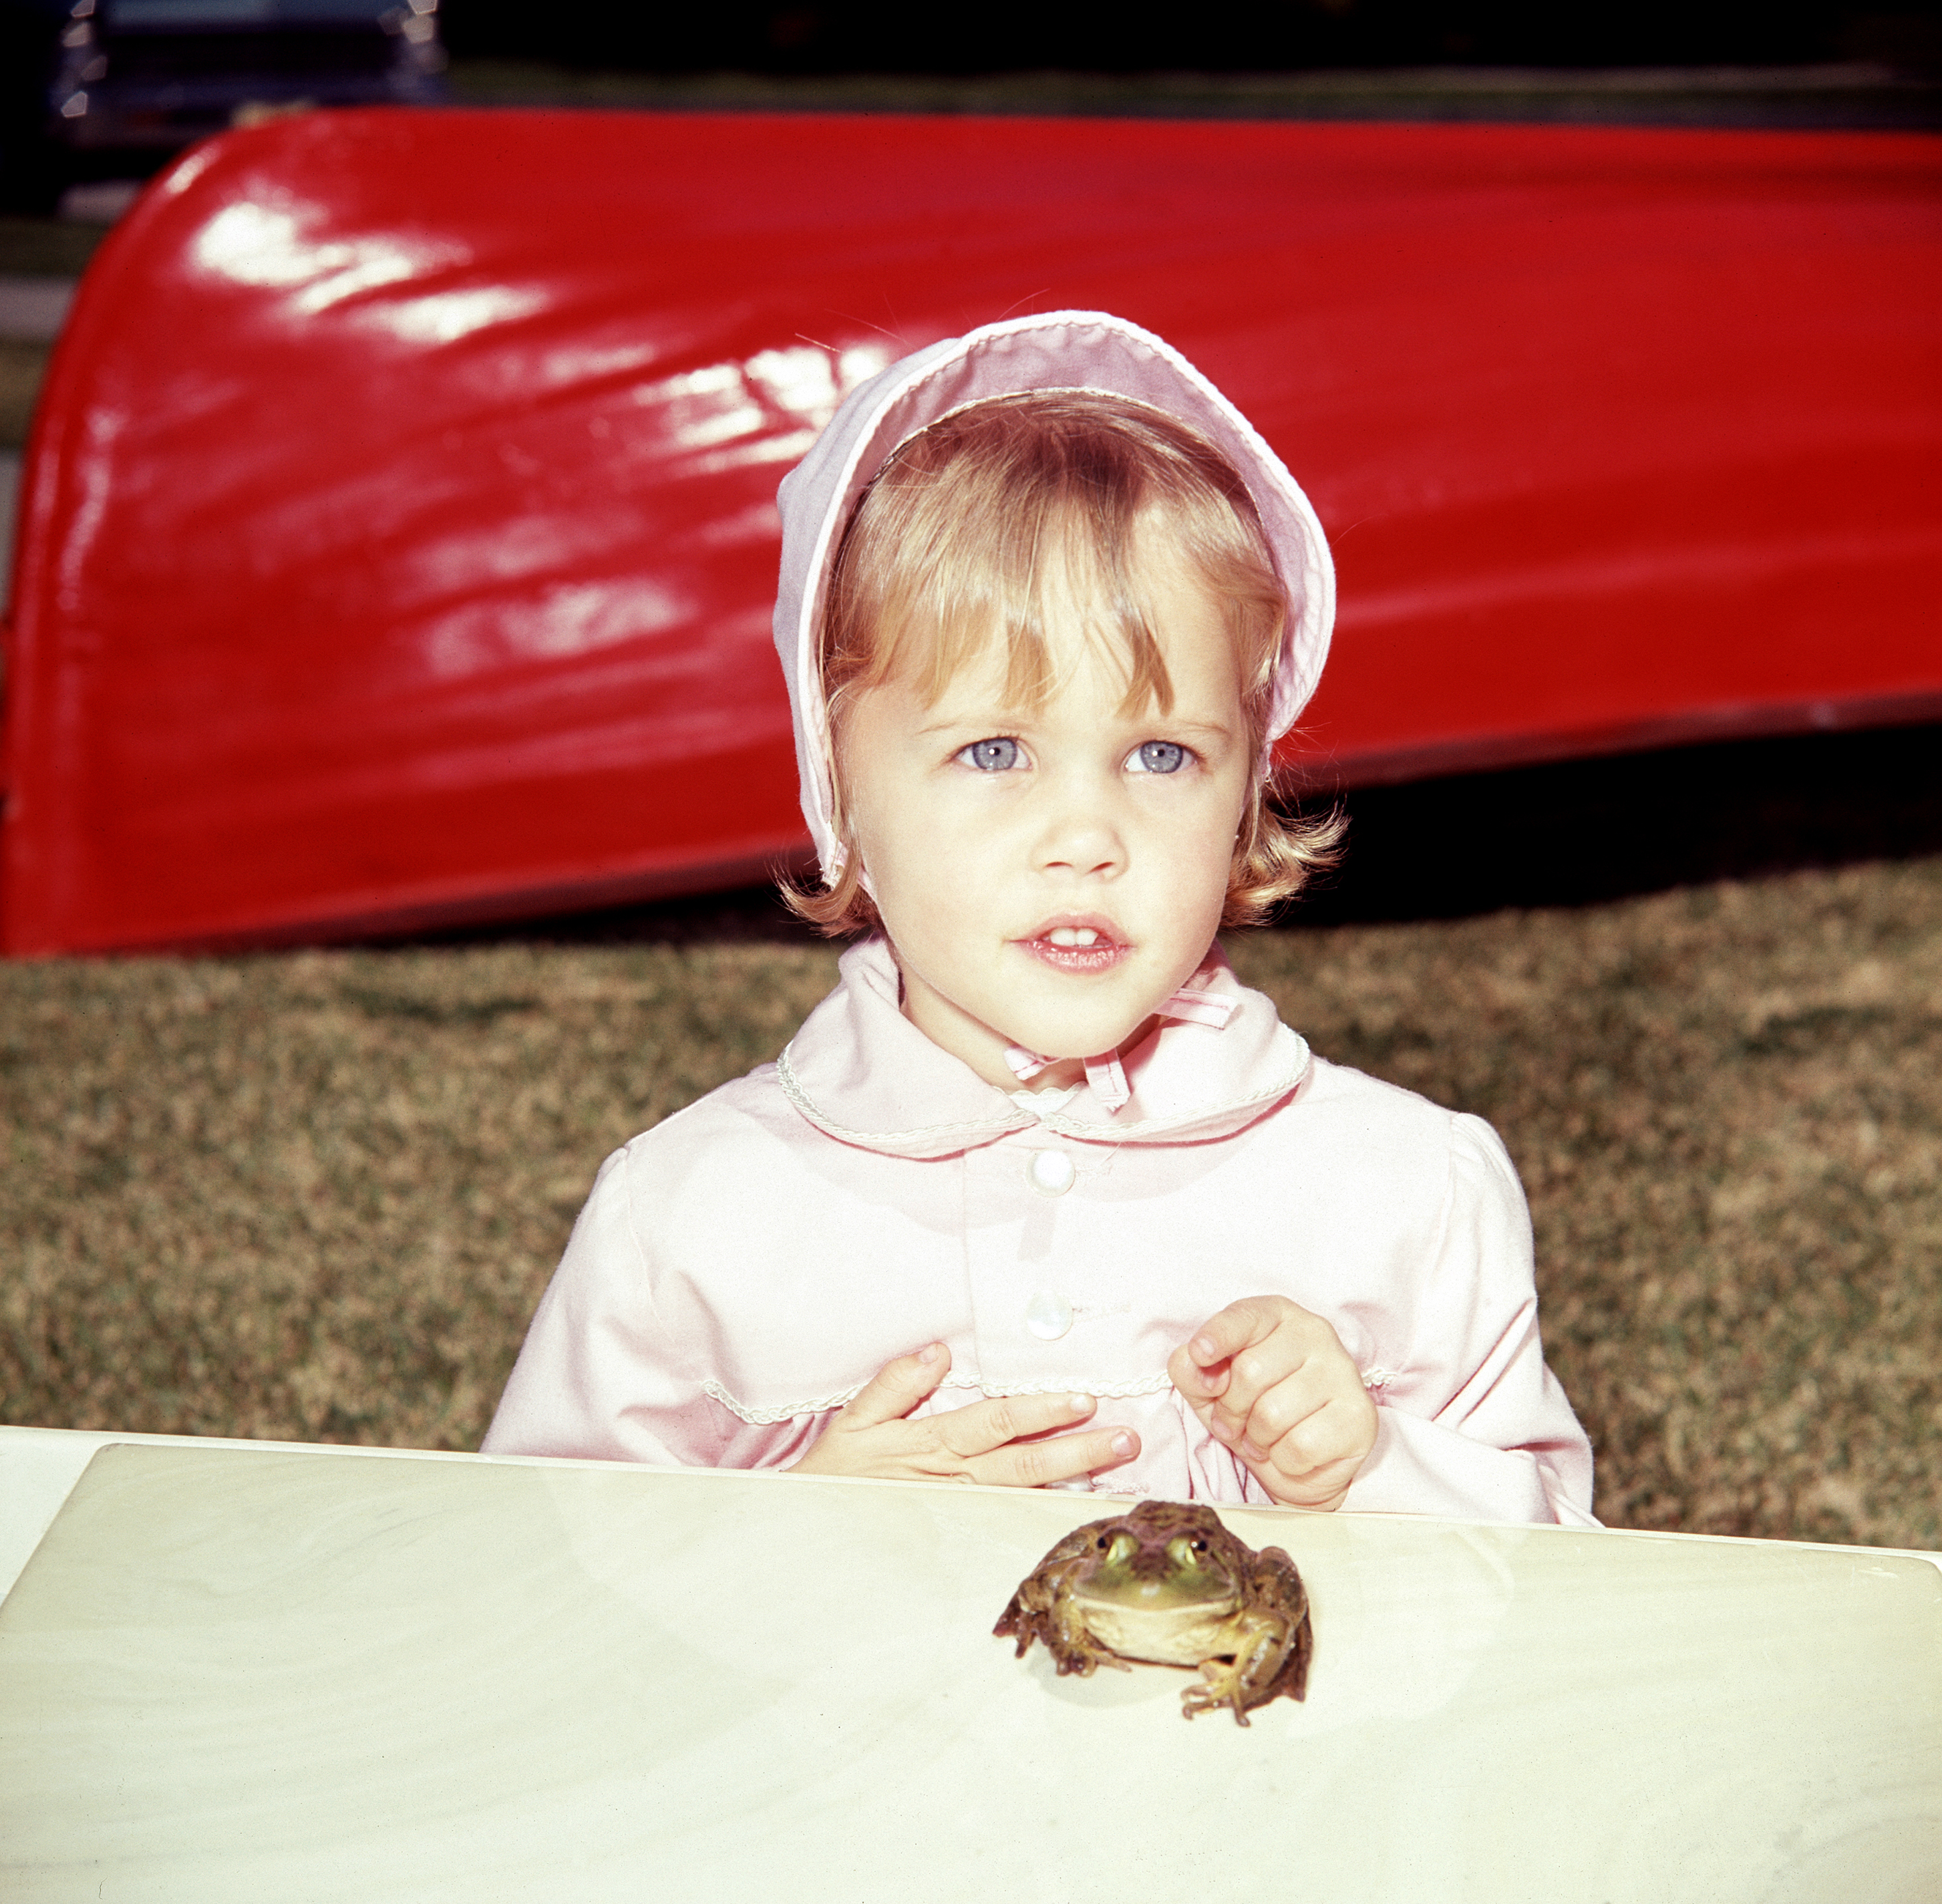 Erin Murphy como Tabitha Stephens en "Bewitched", el 27 de abril de 1967. | Foto: Getty Images